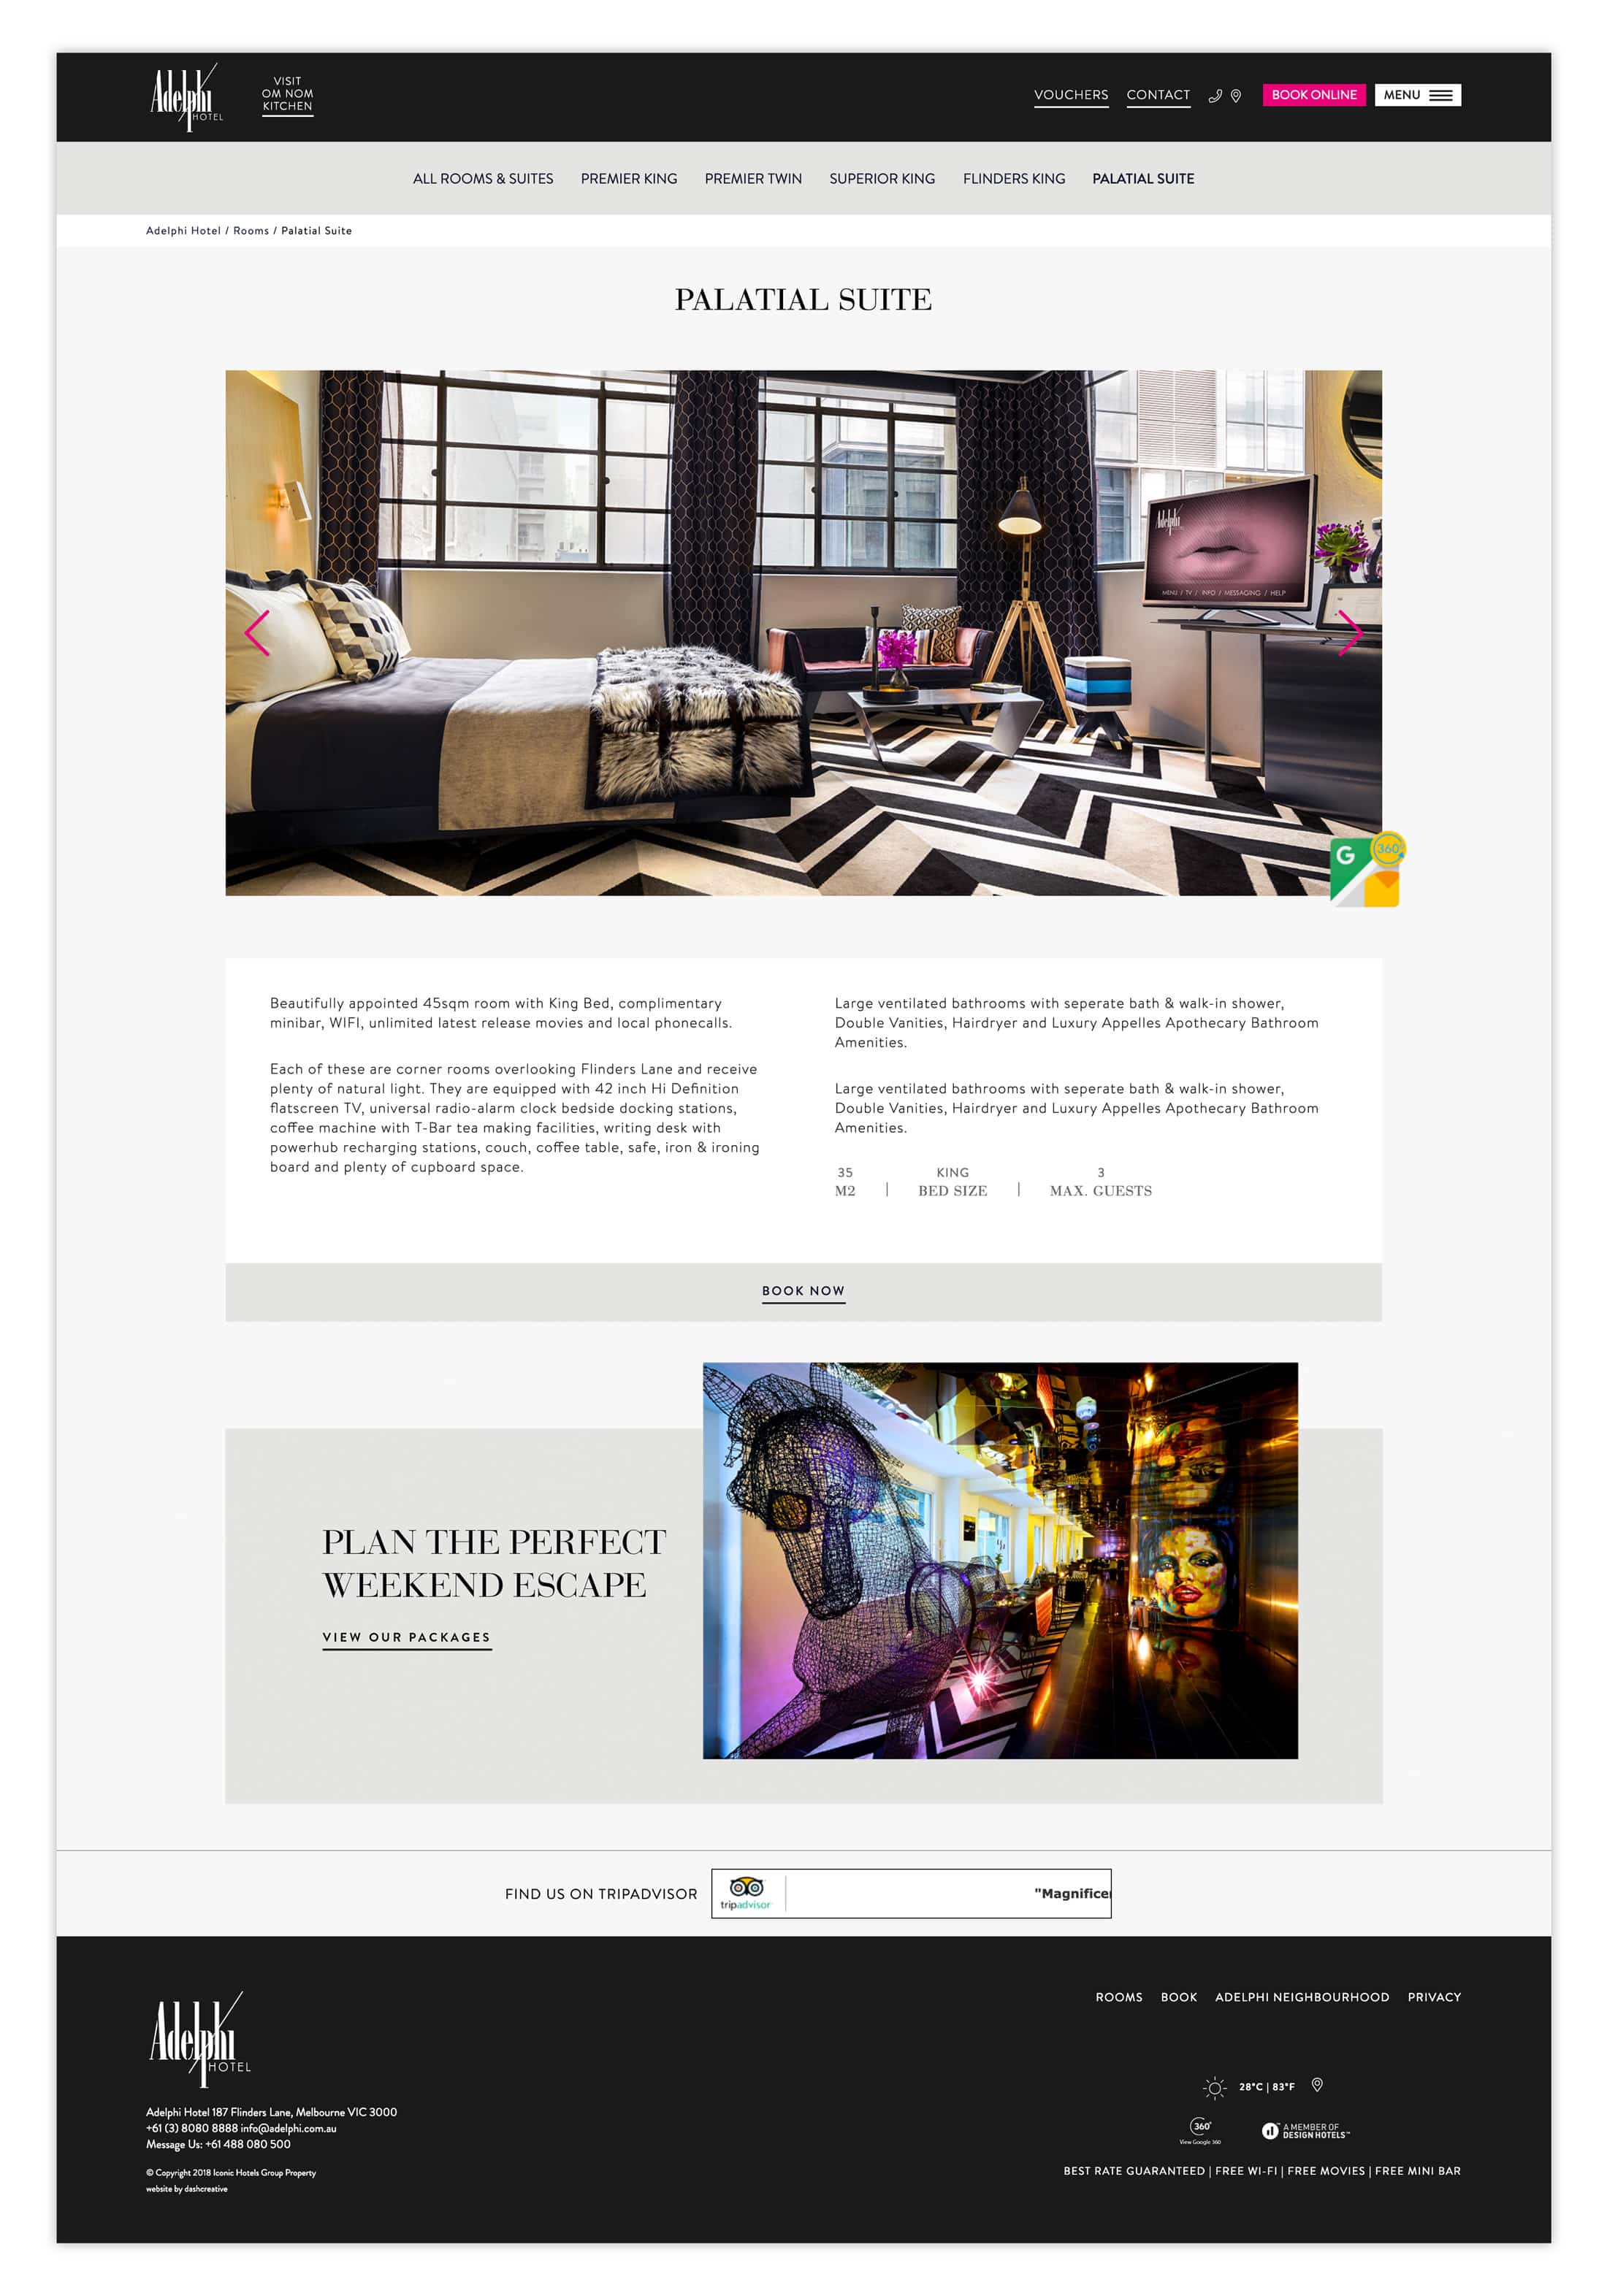 Adelphi Hotel - Website Design